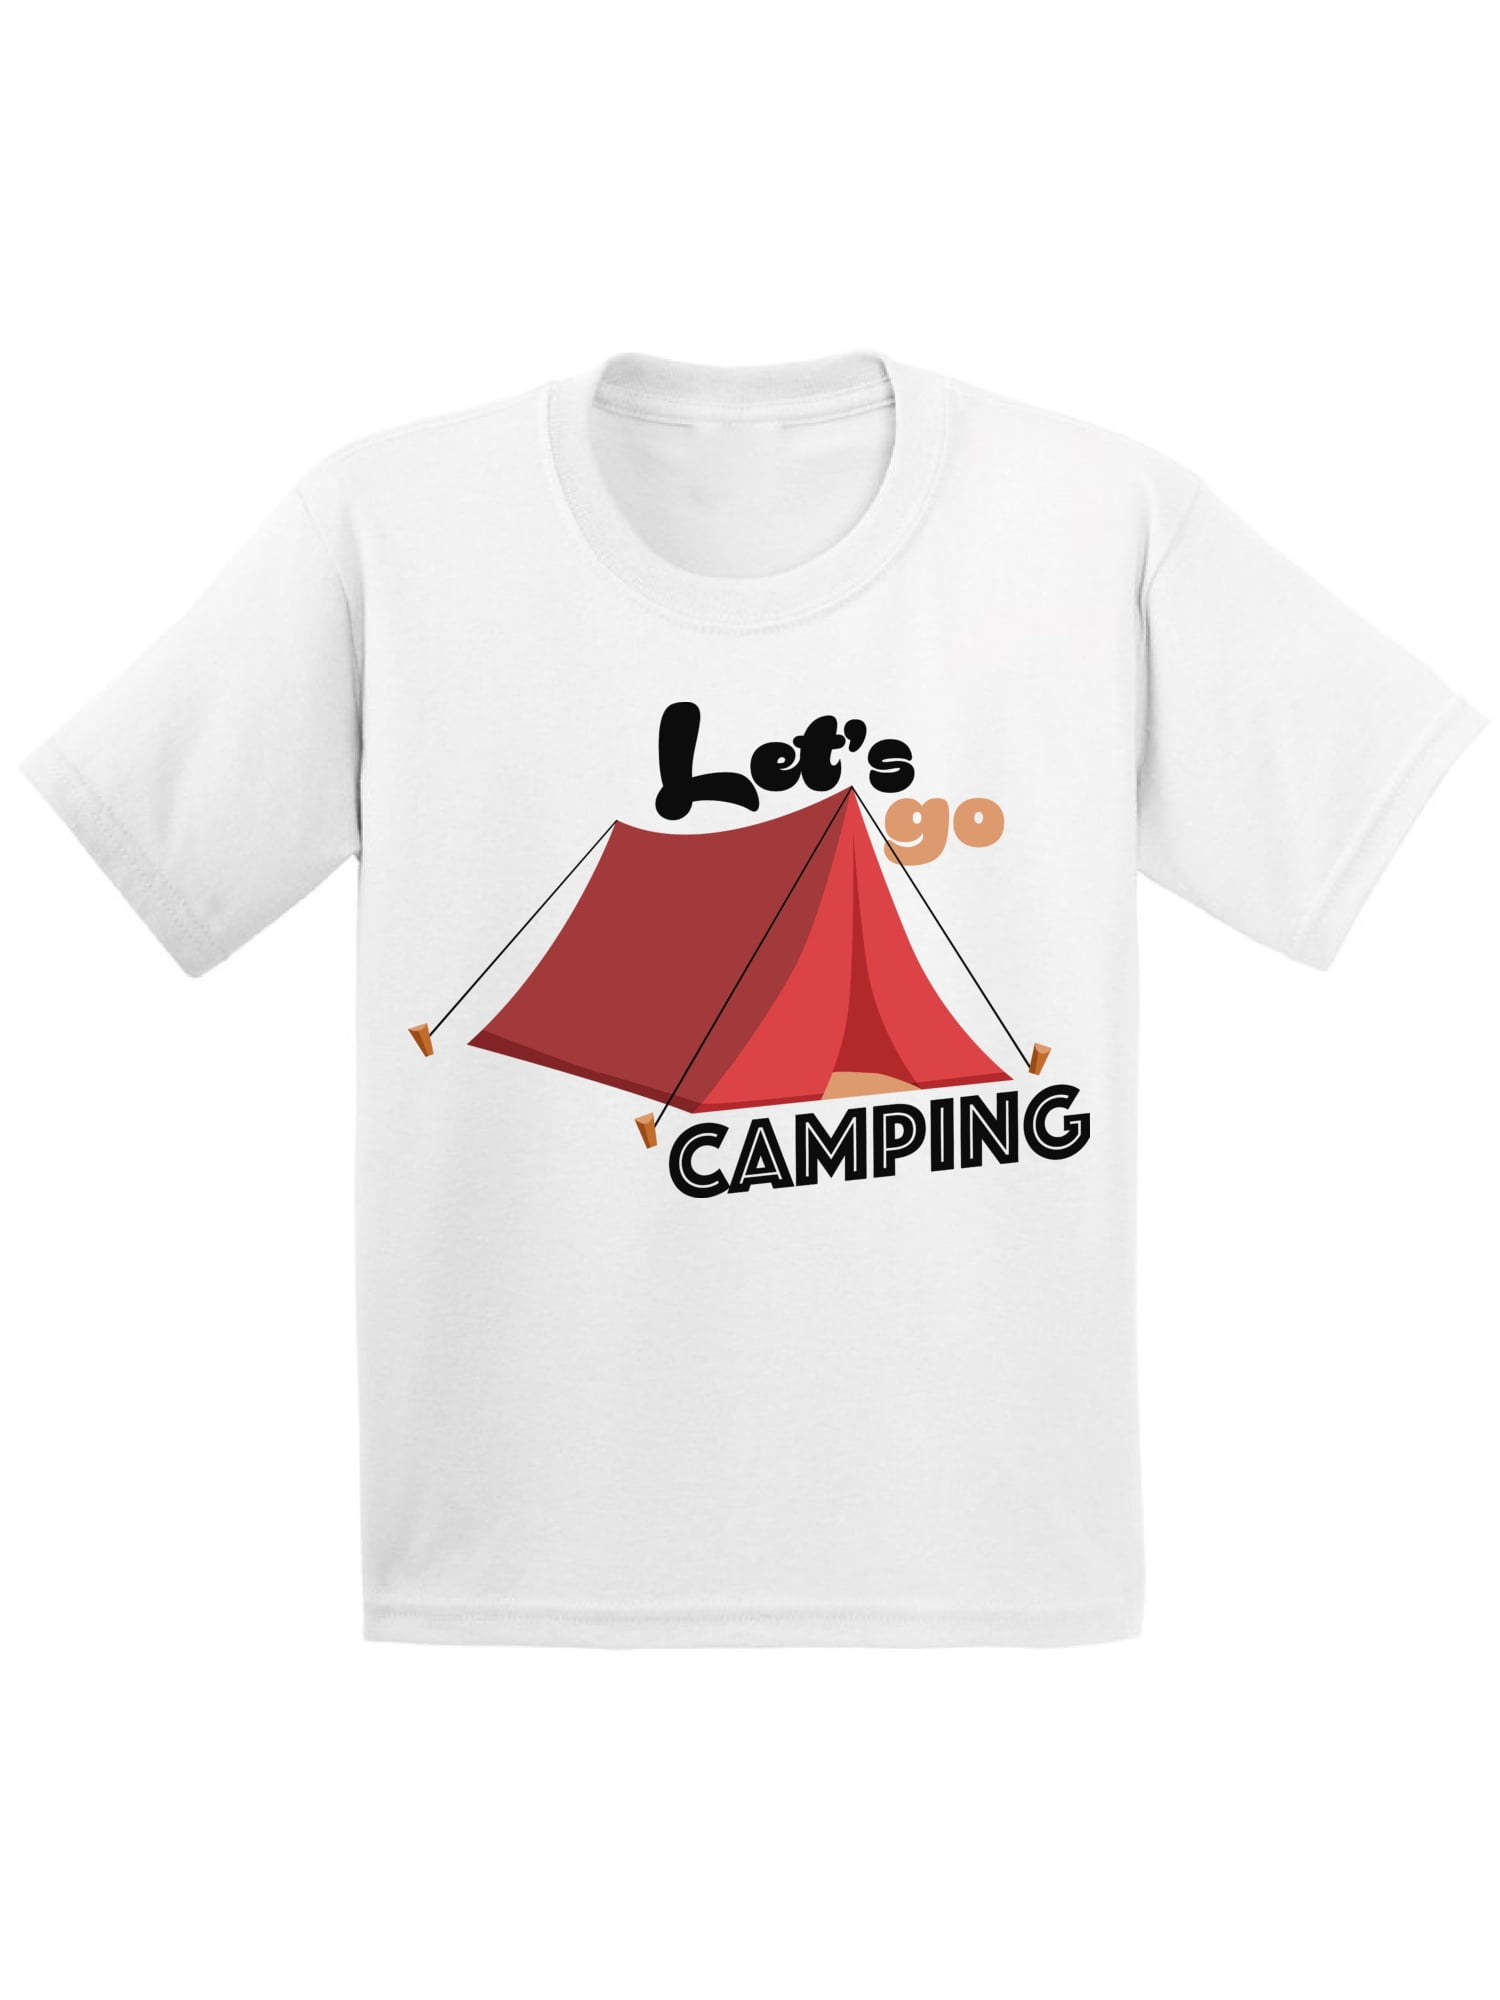 Camping t-shirt vacation shirt I love camping tee nature t-shirt pitch a tent shirt tent t-shirt under the stars shirt travel t-shirt